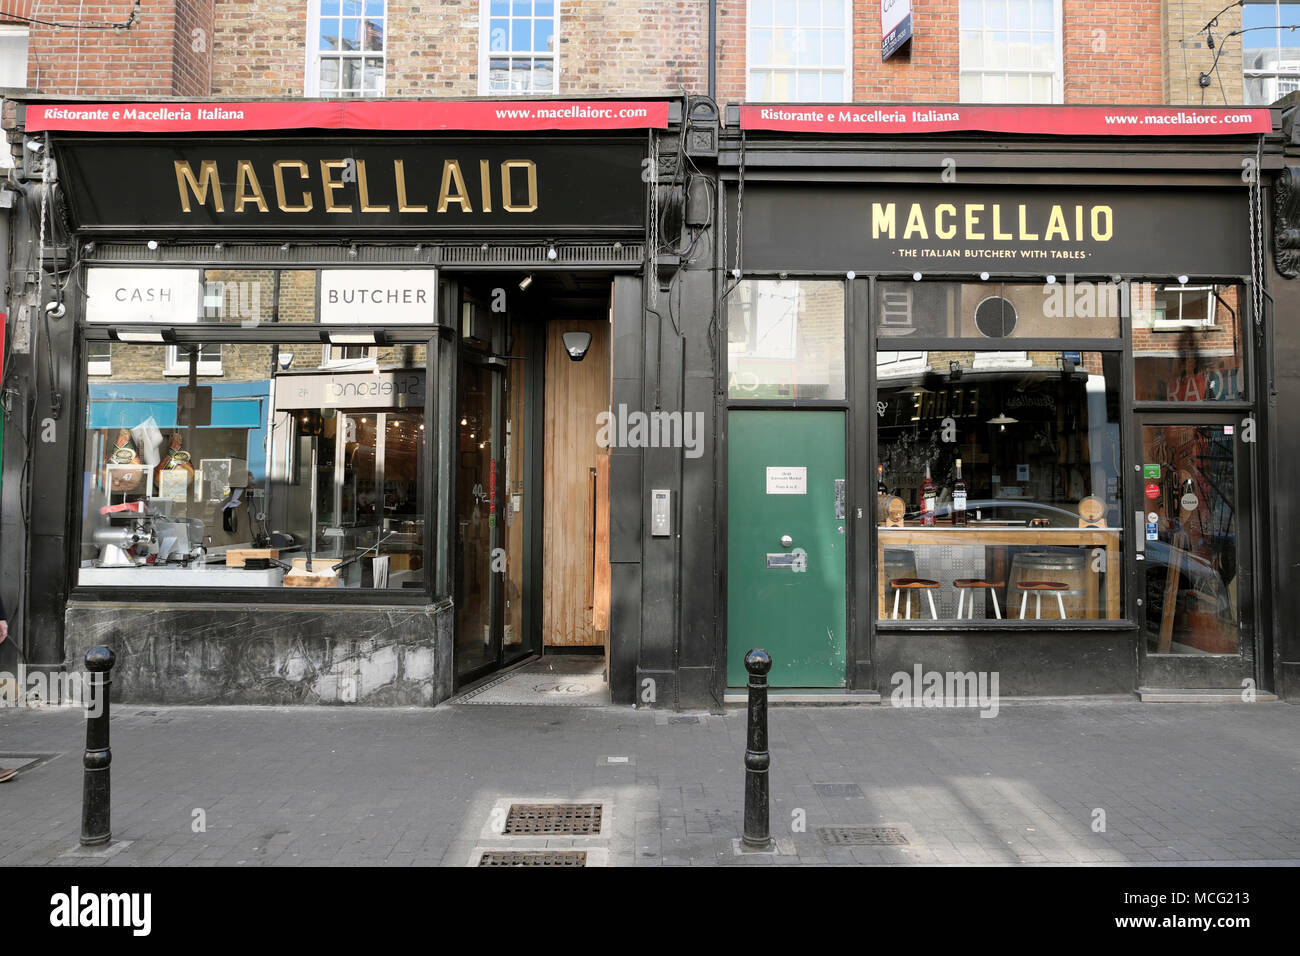 Macellaio Italian restaurant shop exterior in Exmouth Market, Clerkenwell, London UK  KATHY DEWITT Stock Photo